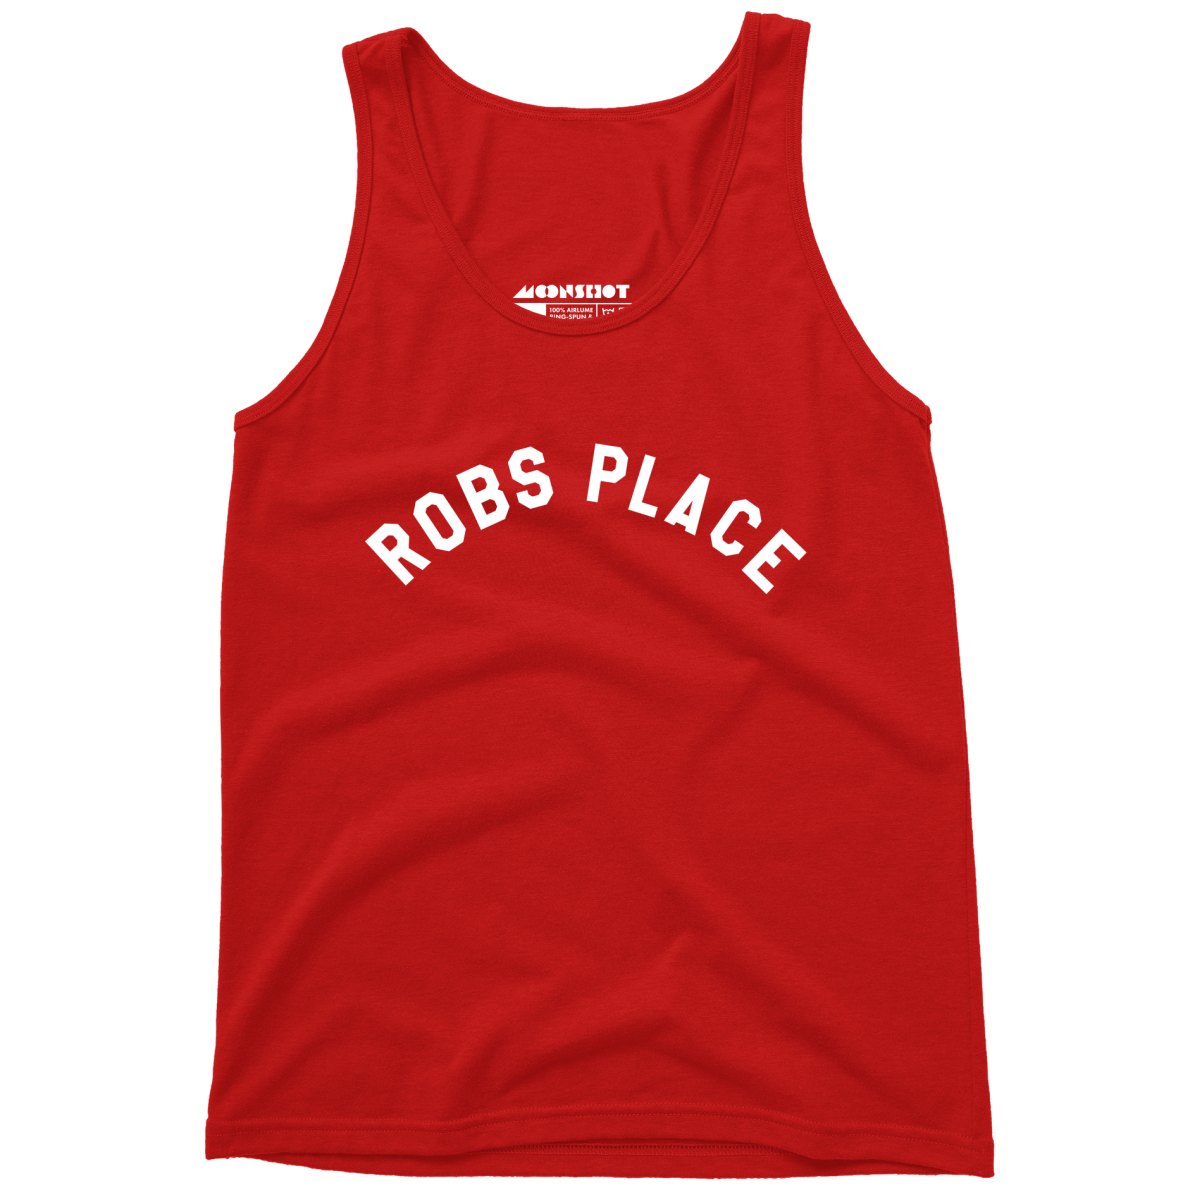 Rob's Place - Unisex Tank Top